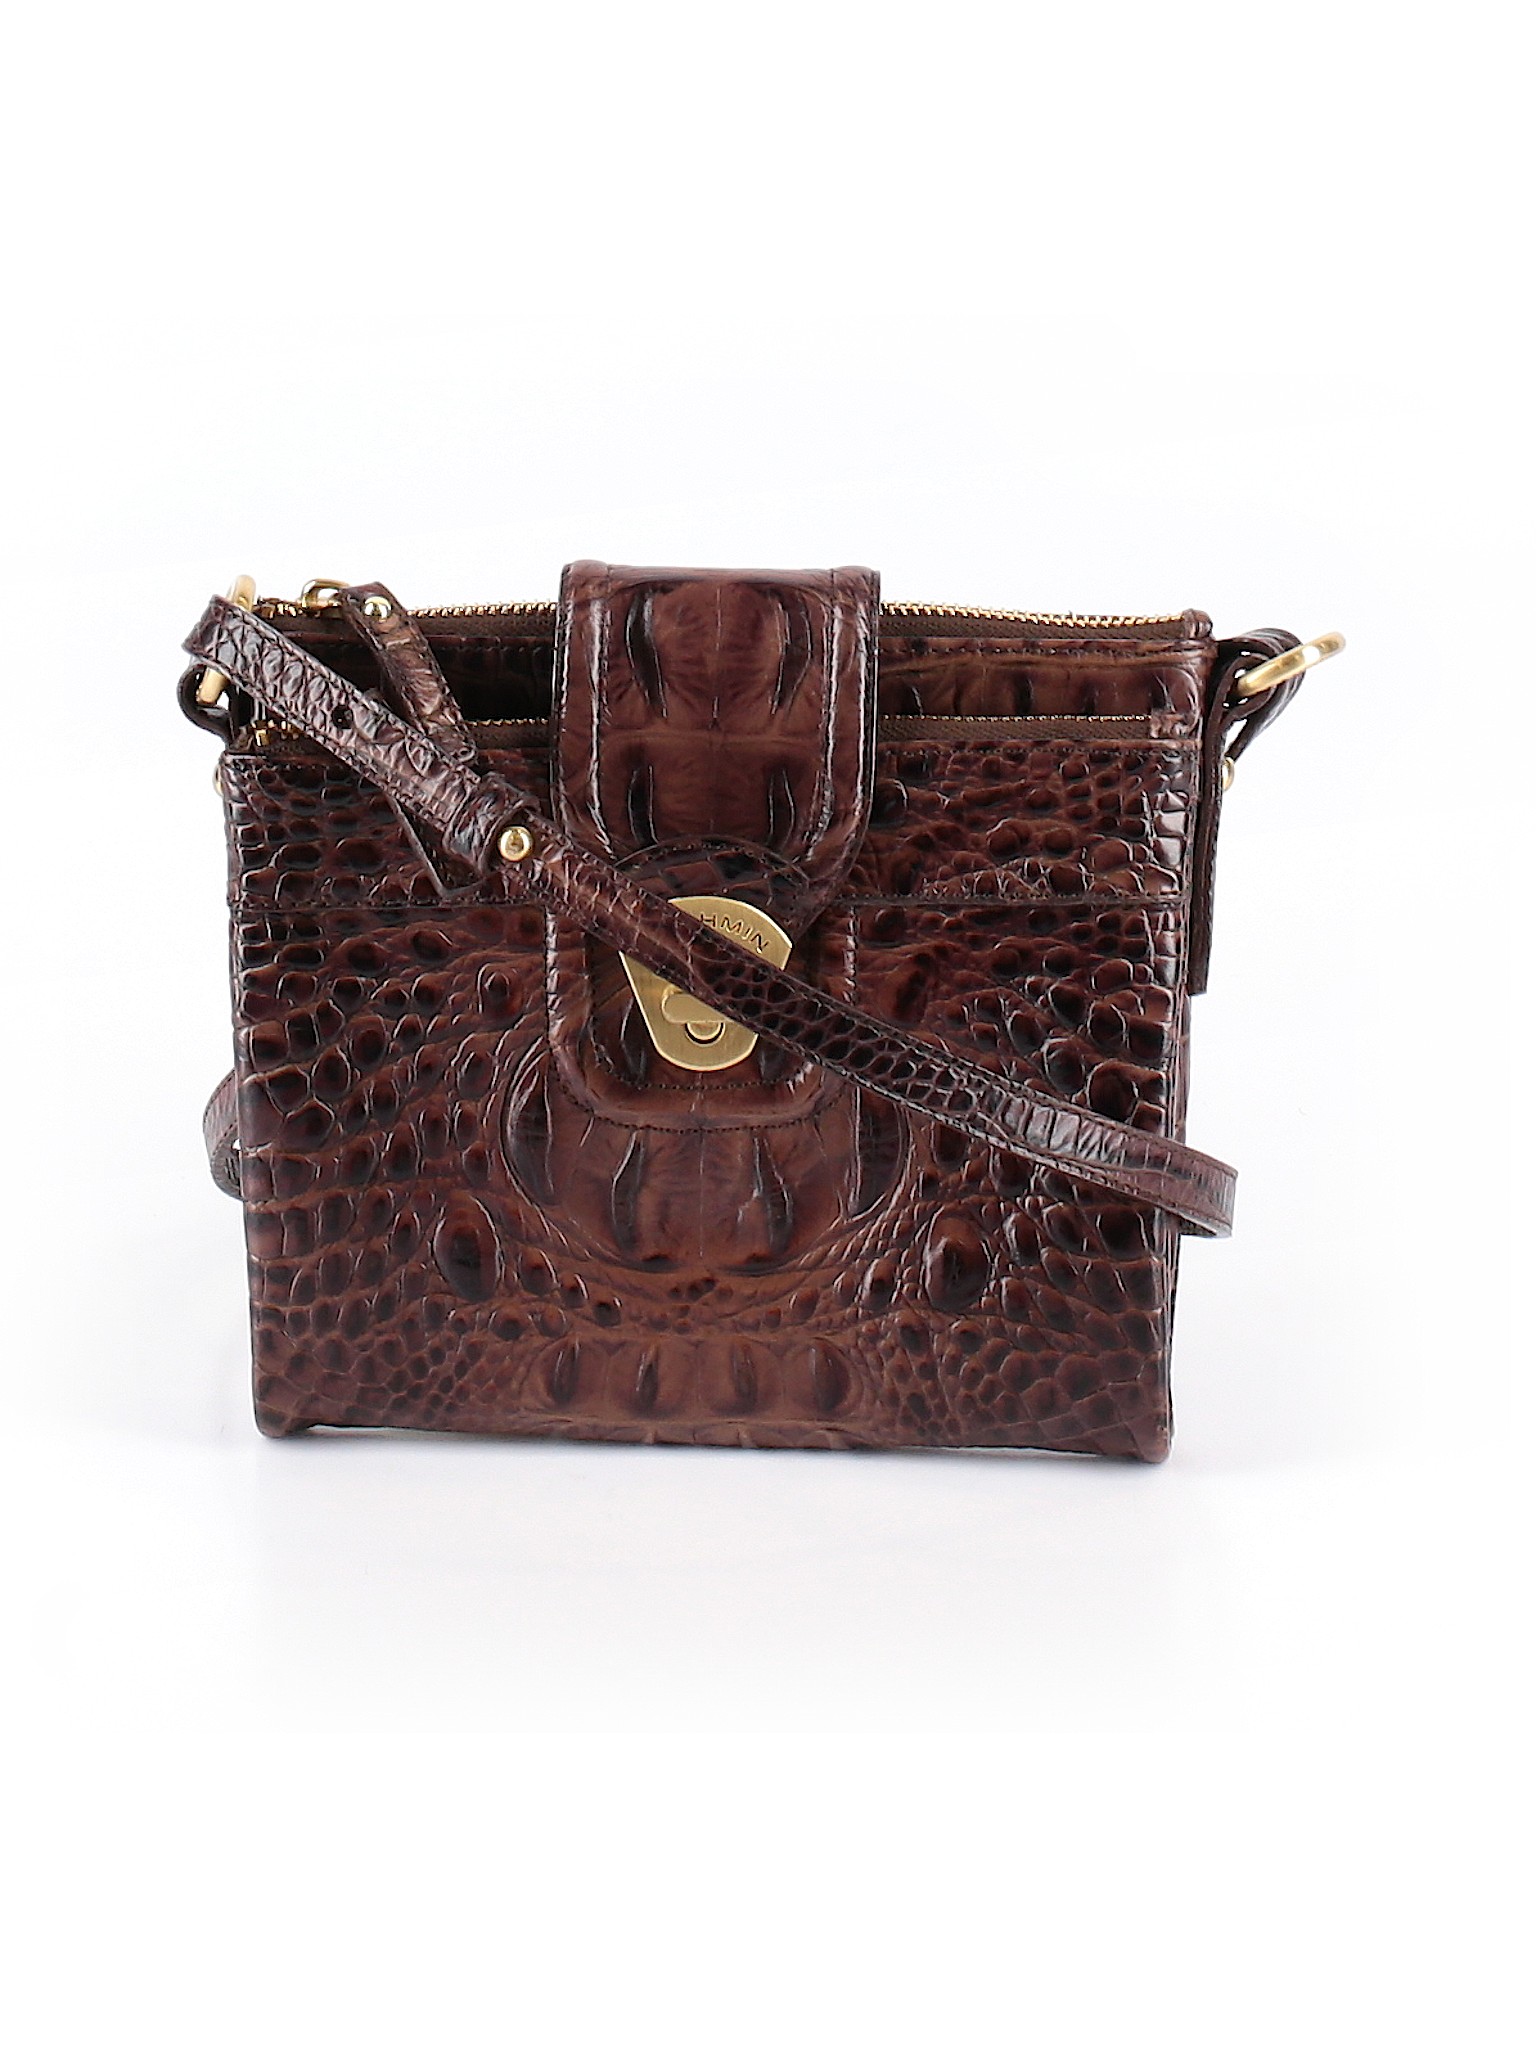 Brahmin Women Brown Leather Crossbody Bag One Size | eBay